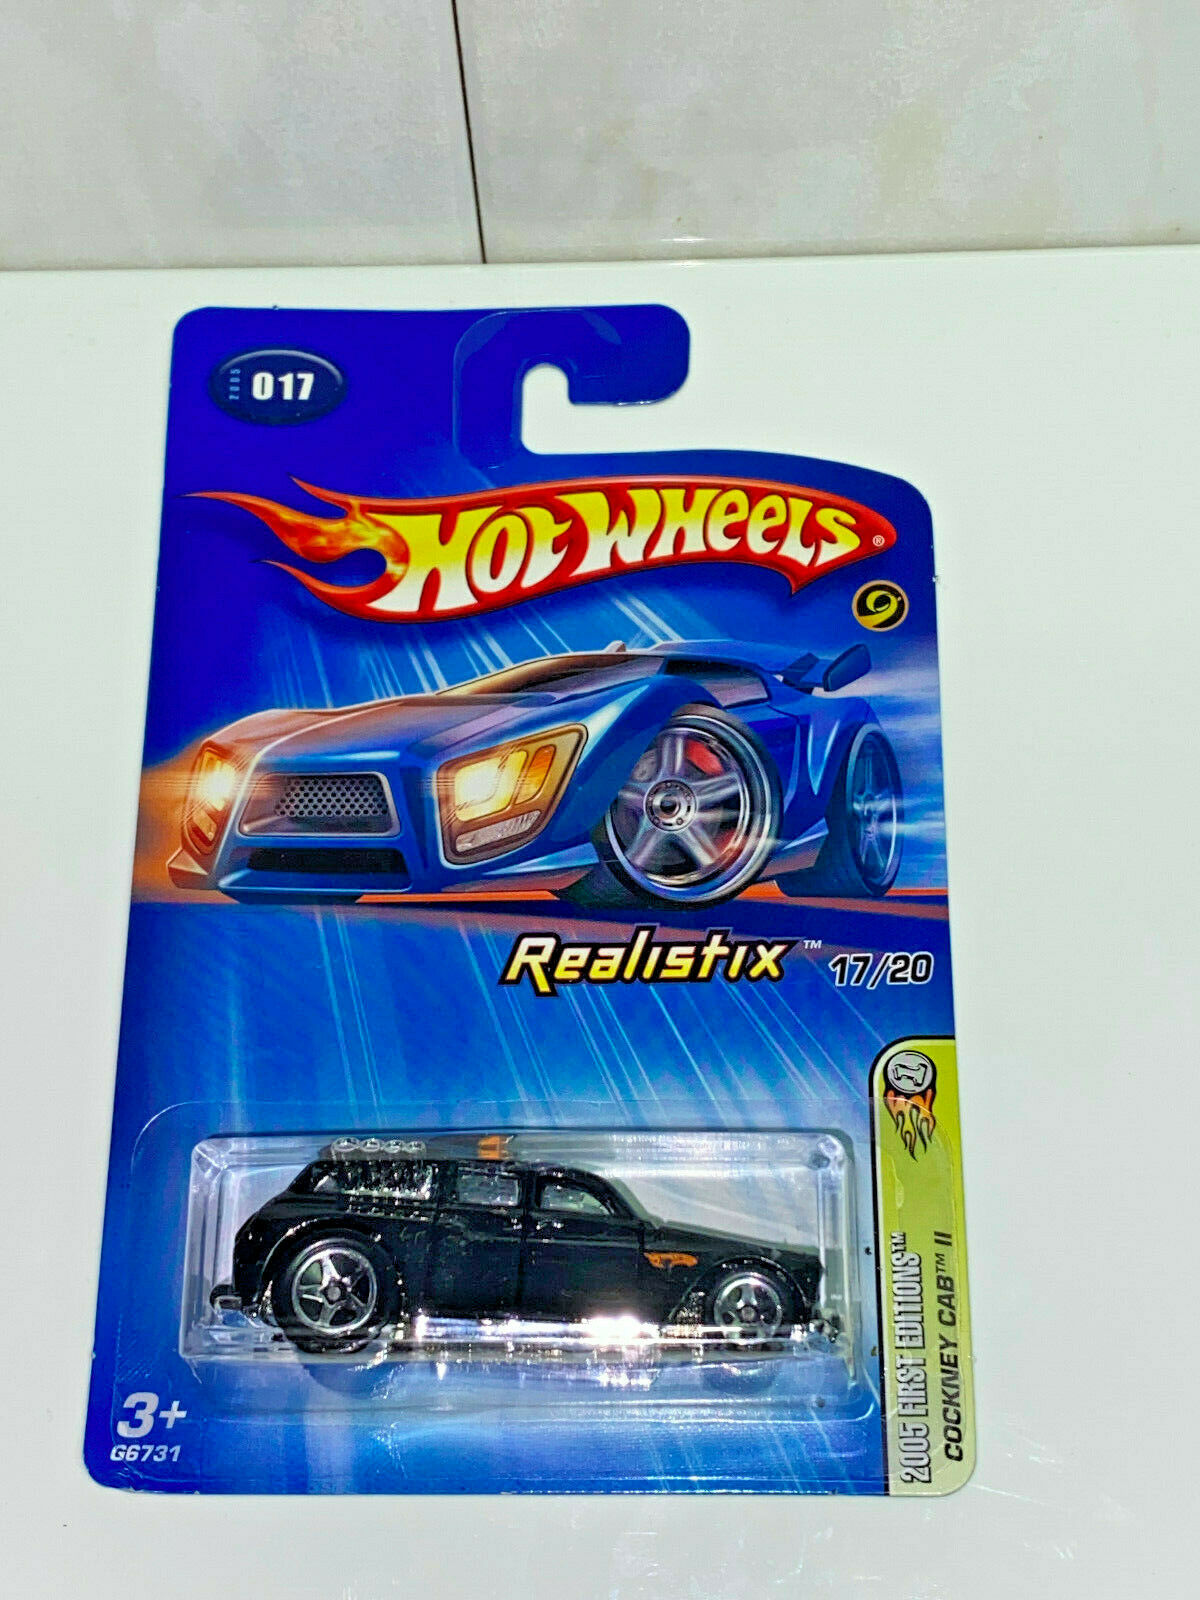 2005 Hot Wheels Realistix 17/20 2005 First Editions Cockney Cab II #017 NIP